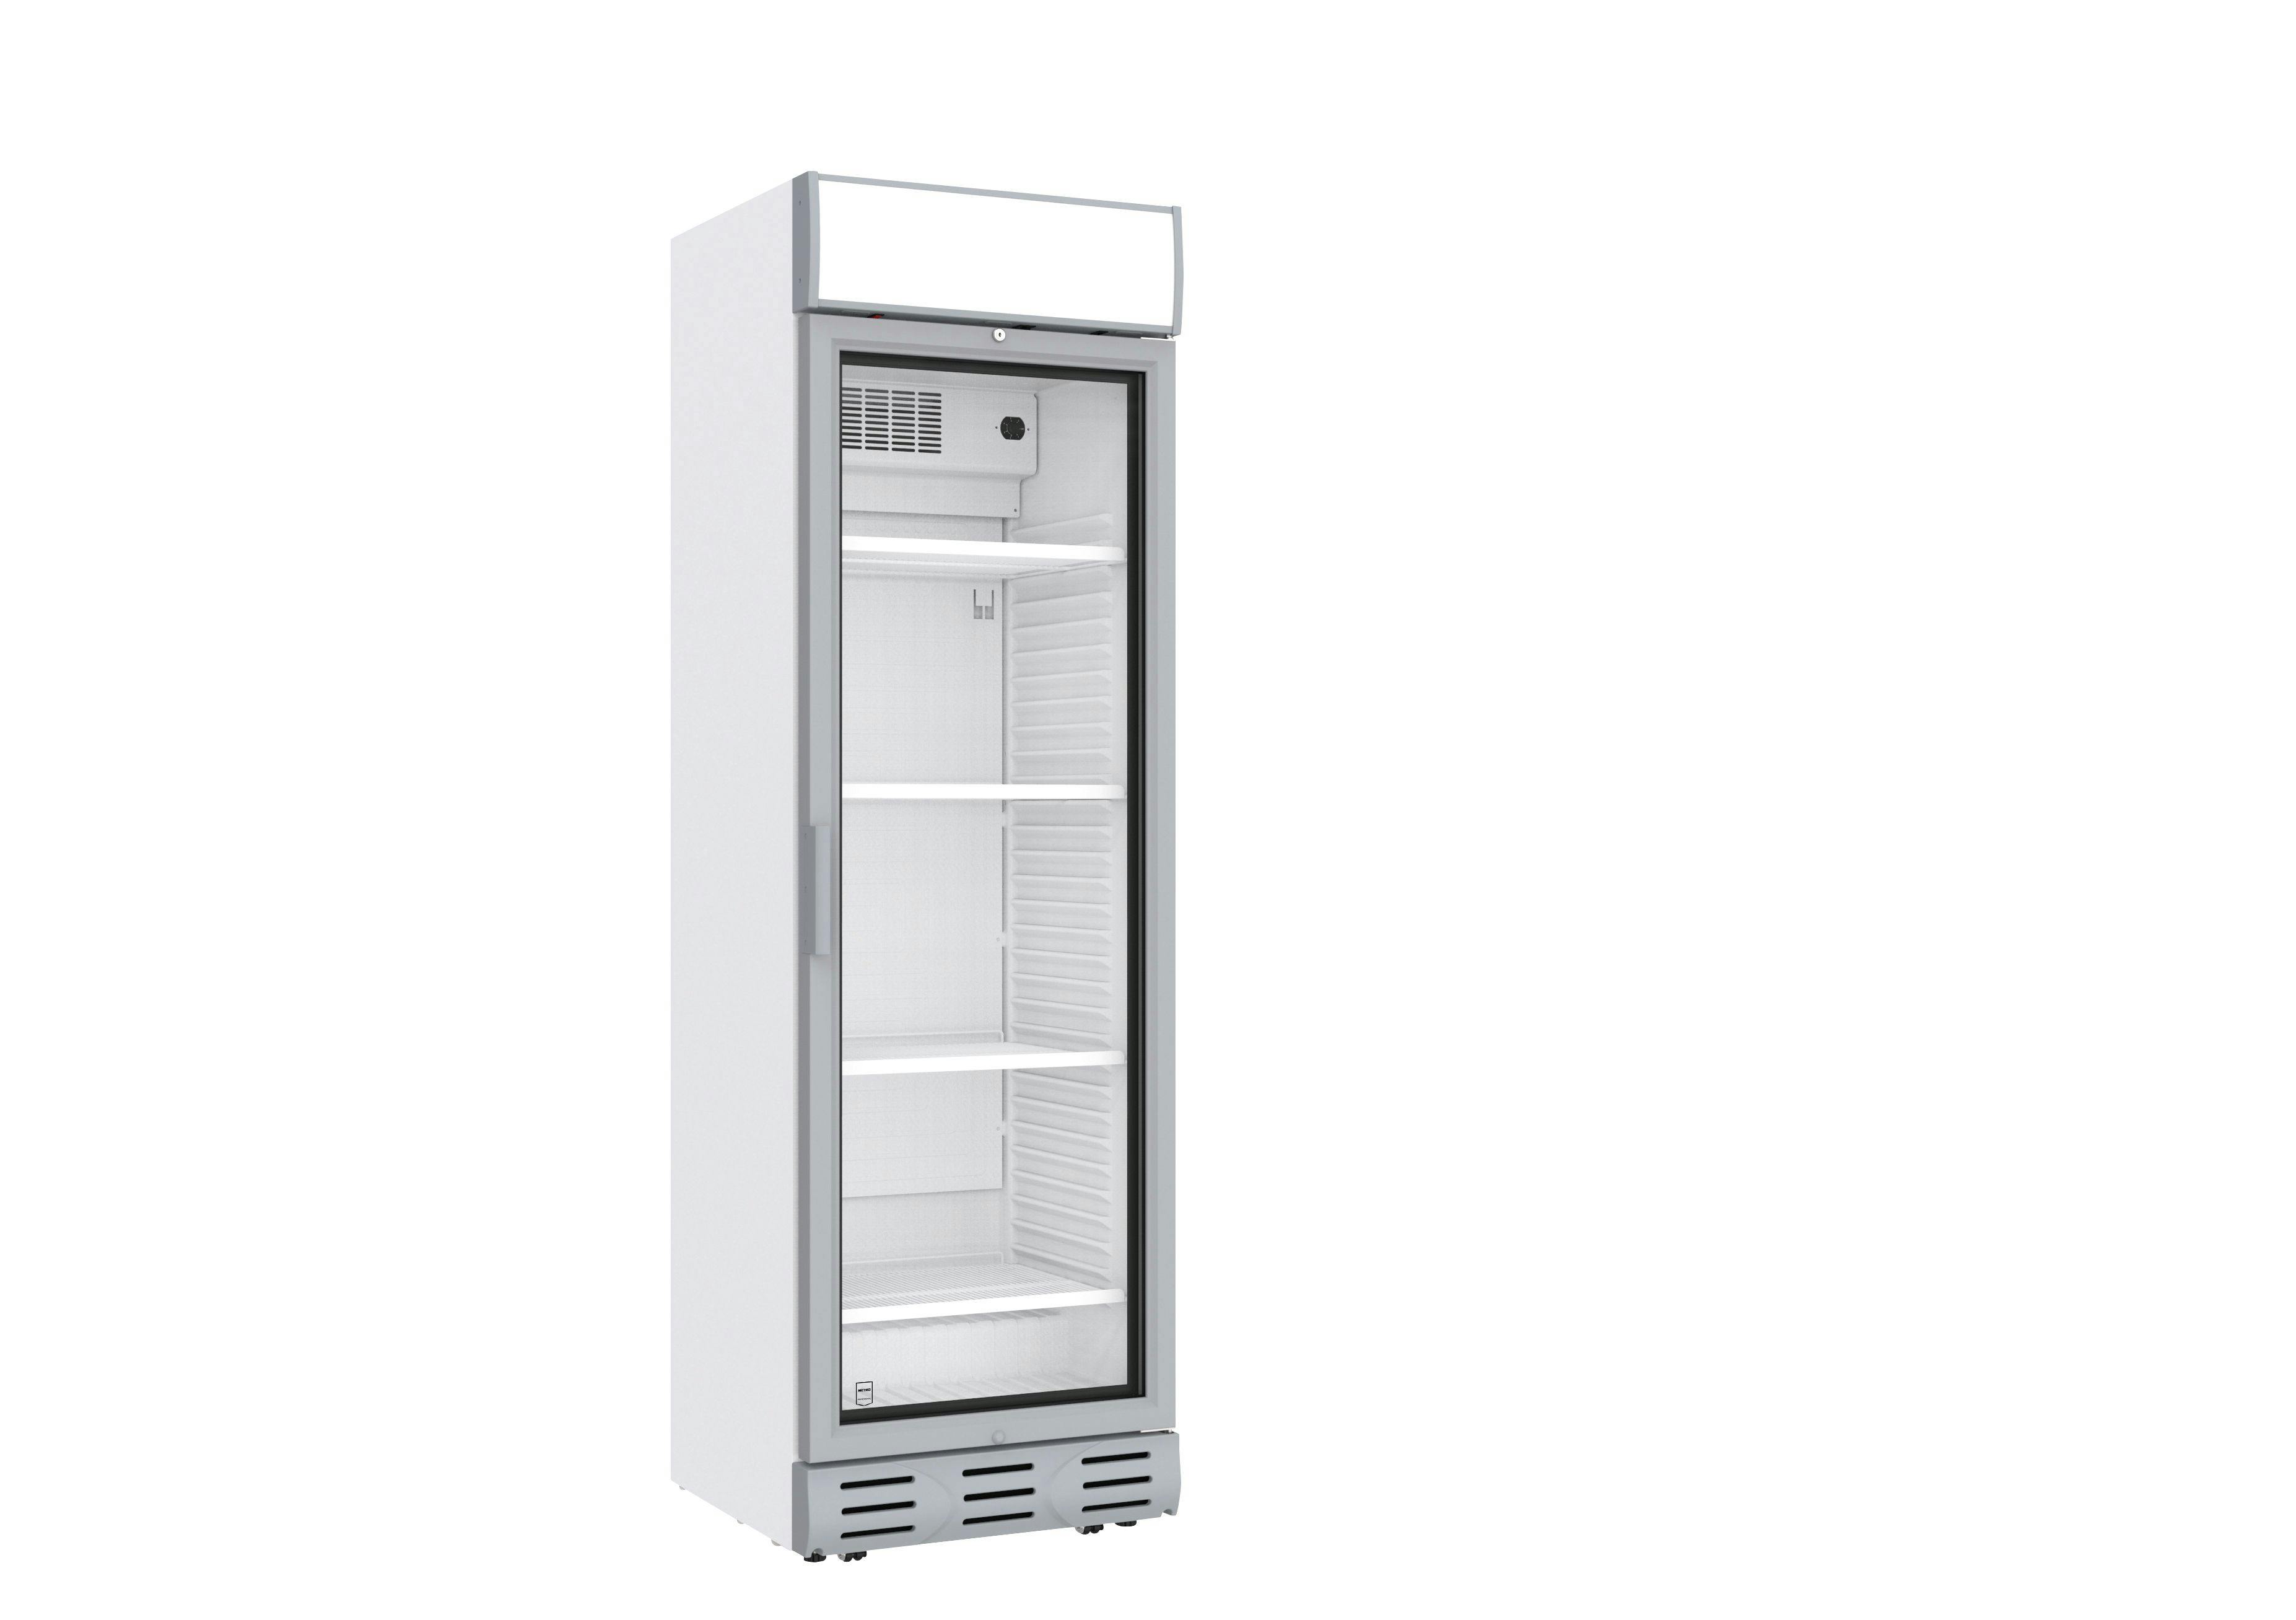 METRO Professional Minibar / Kühlschrank GPC1046, Glas / Edelstahl, 43 x 48  x 51.5 cm, 46 L, Umluftkühlung, schwarz